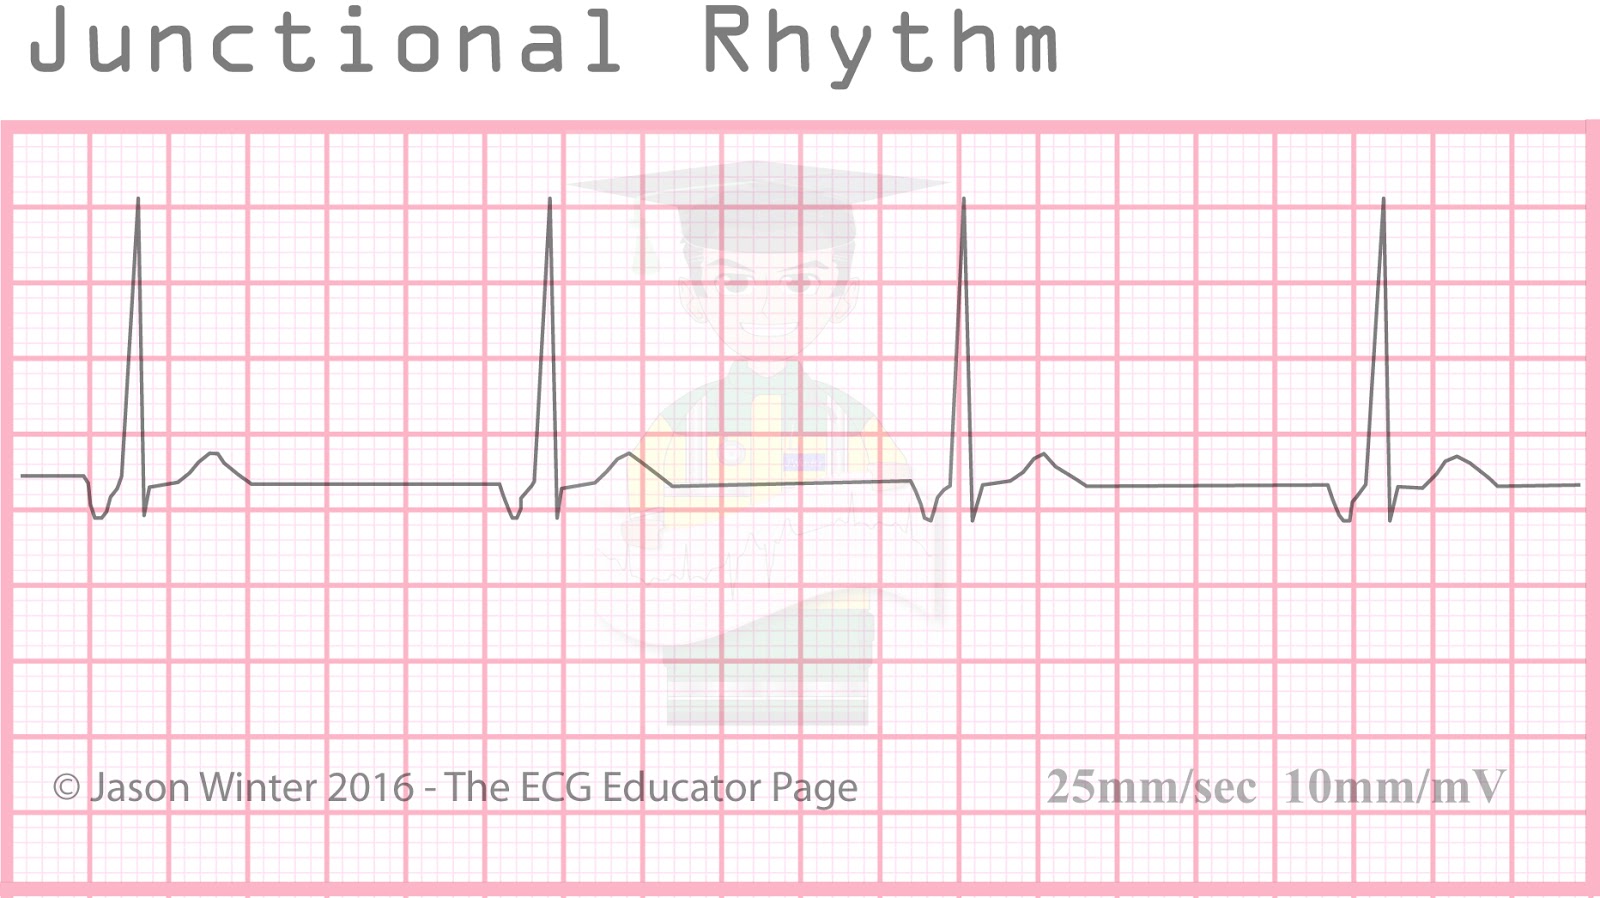 junctional escape rhythm diagram